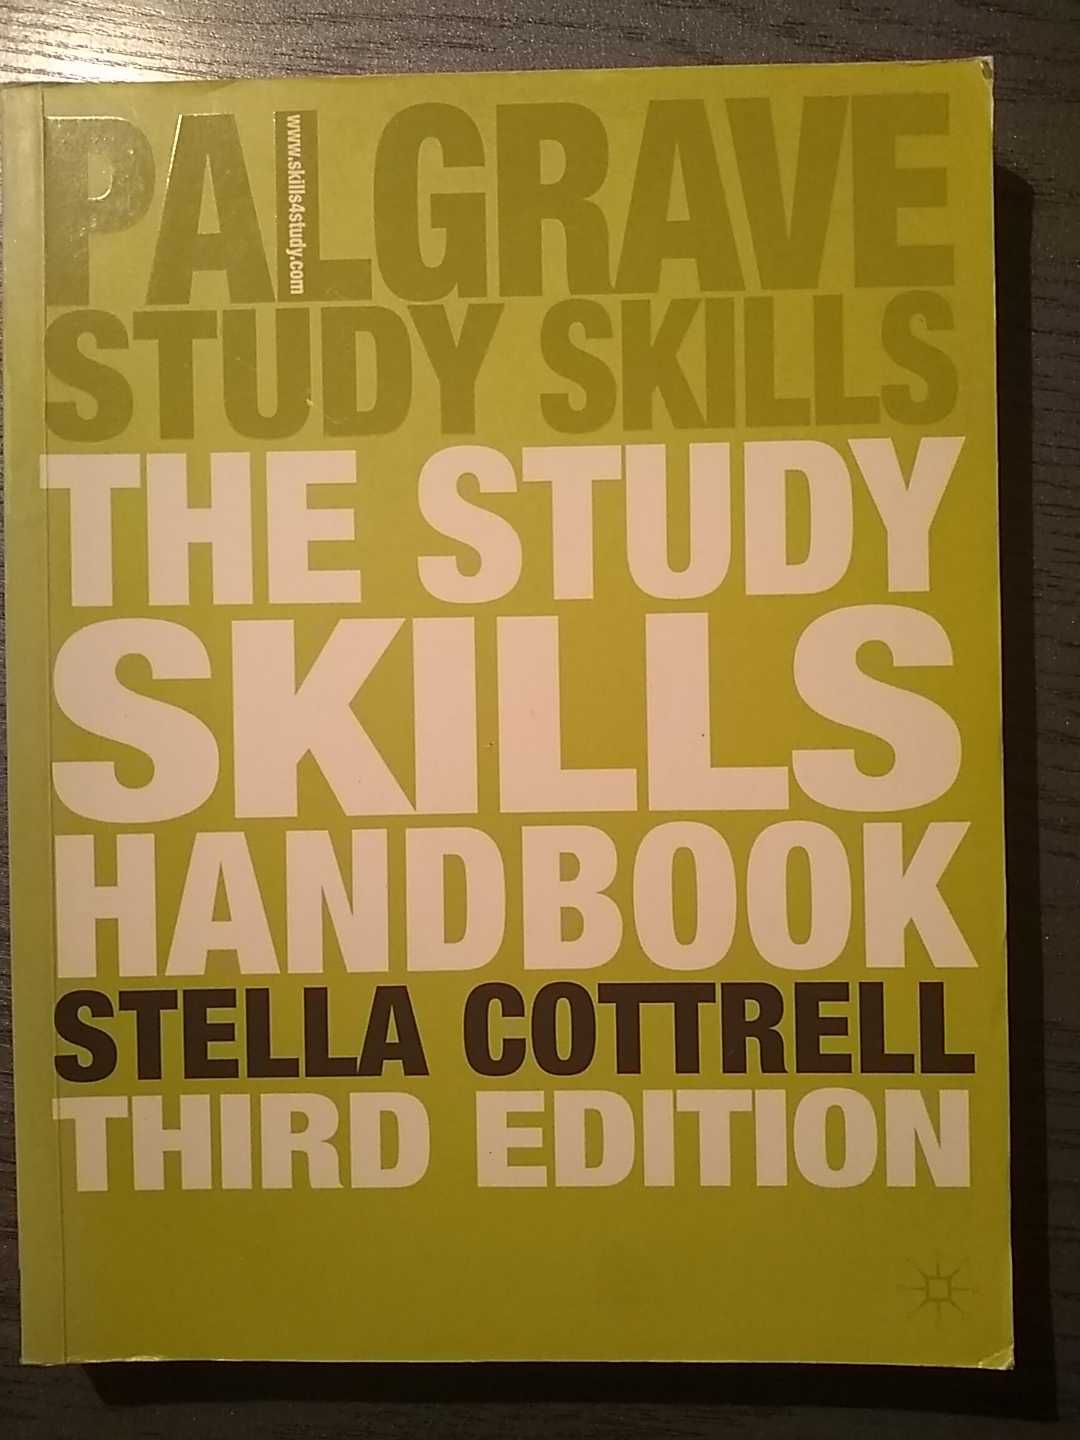 Study skills handbook Cottrell
edycja trzecia